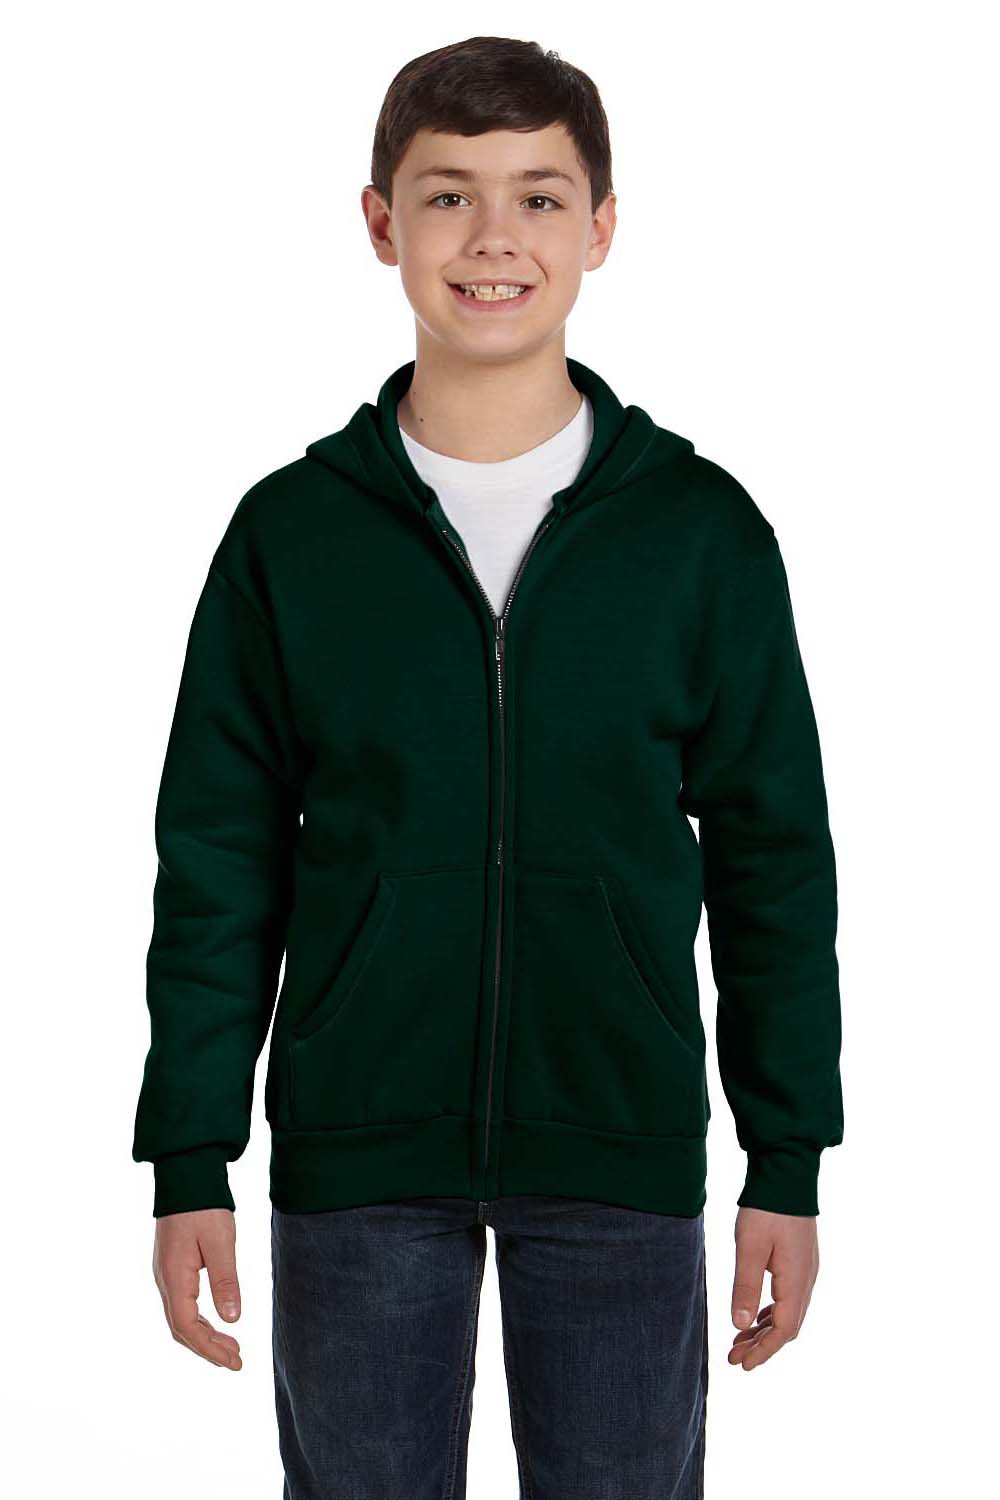 Hanes P480 Youth EcoSmart Print Pro XP Full Zip Hooded Sweatshirt Hoodie Forest Green Front